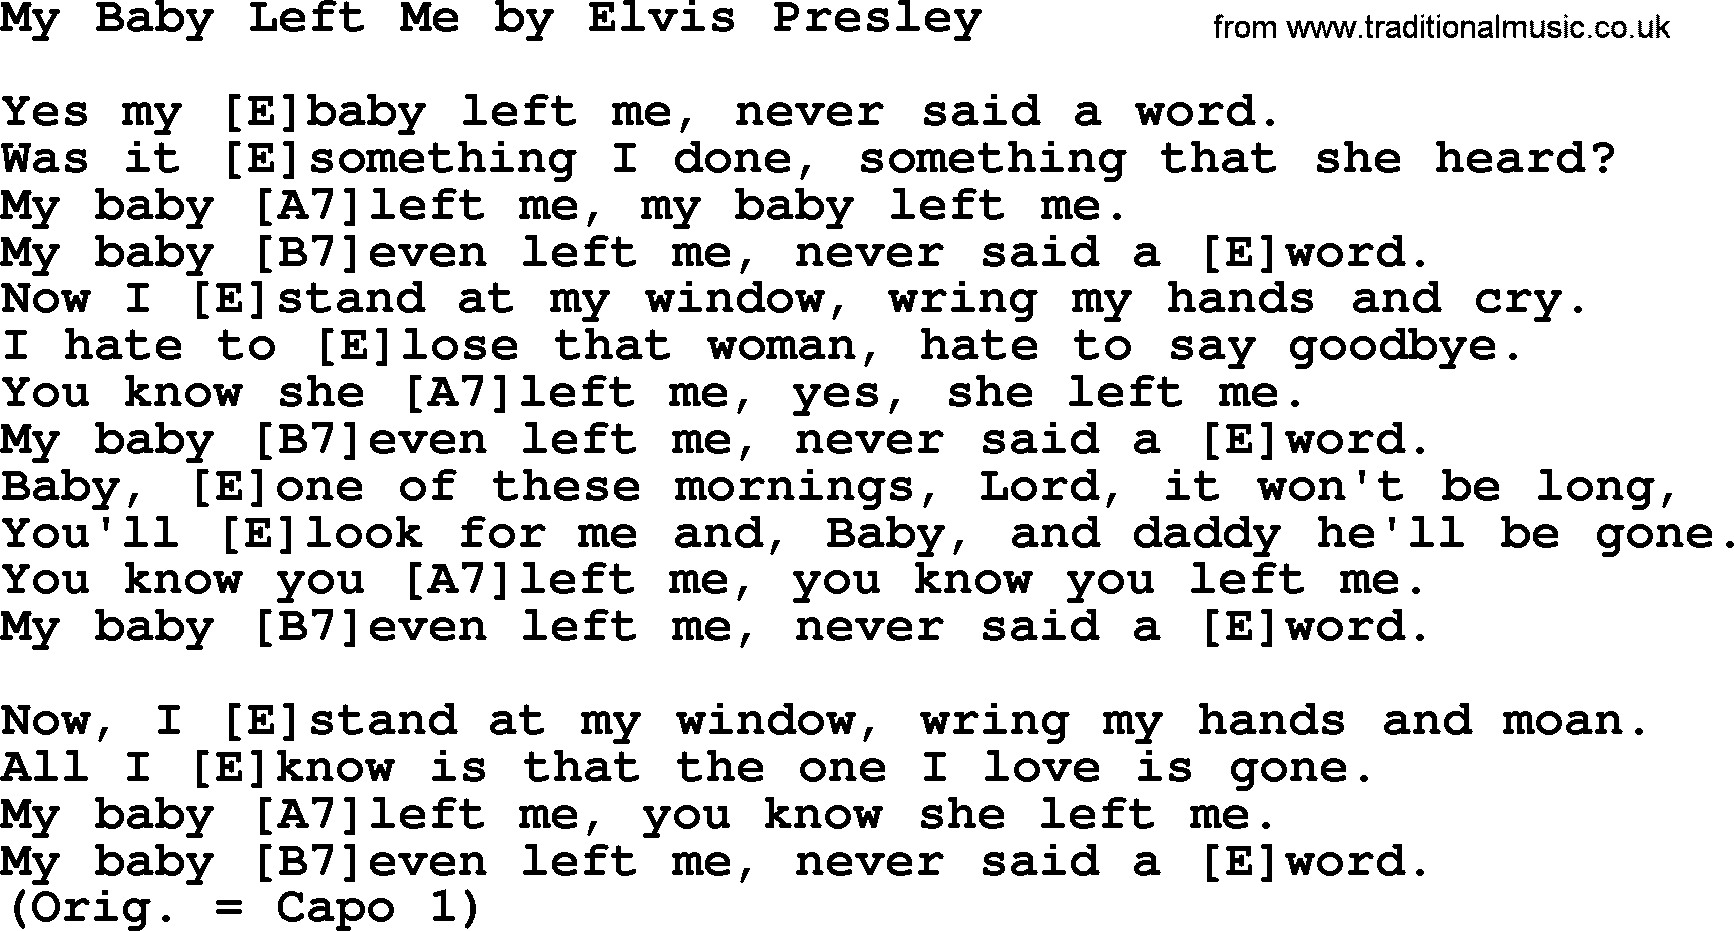 Elvis Presley song: My Baby Left Me, lyrics and chords